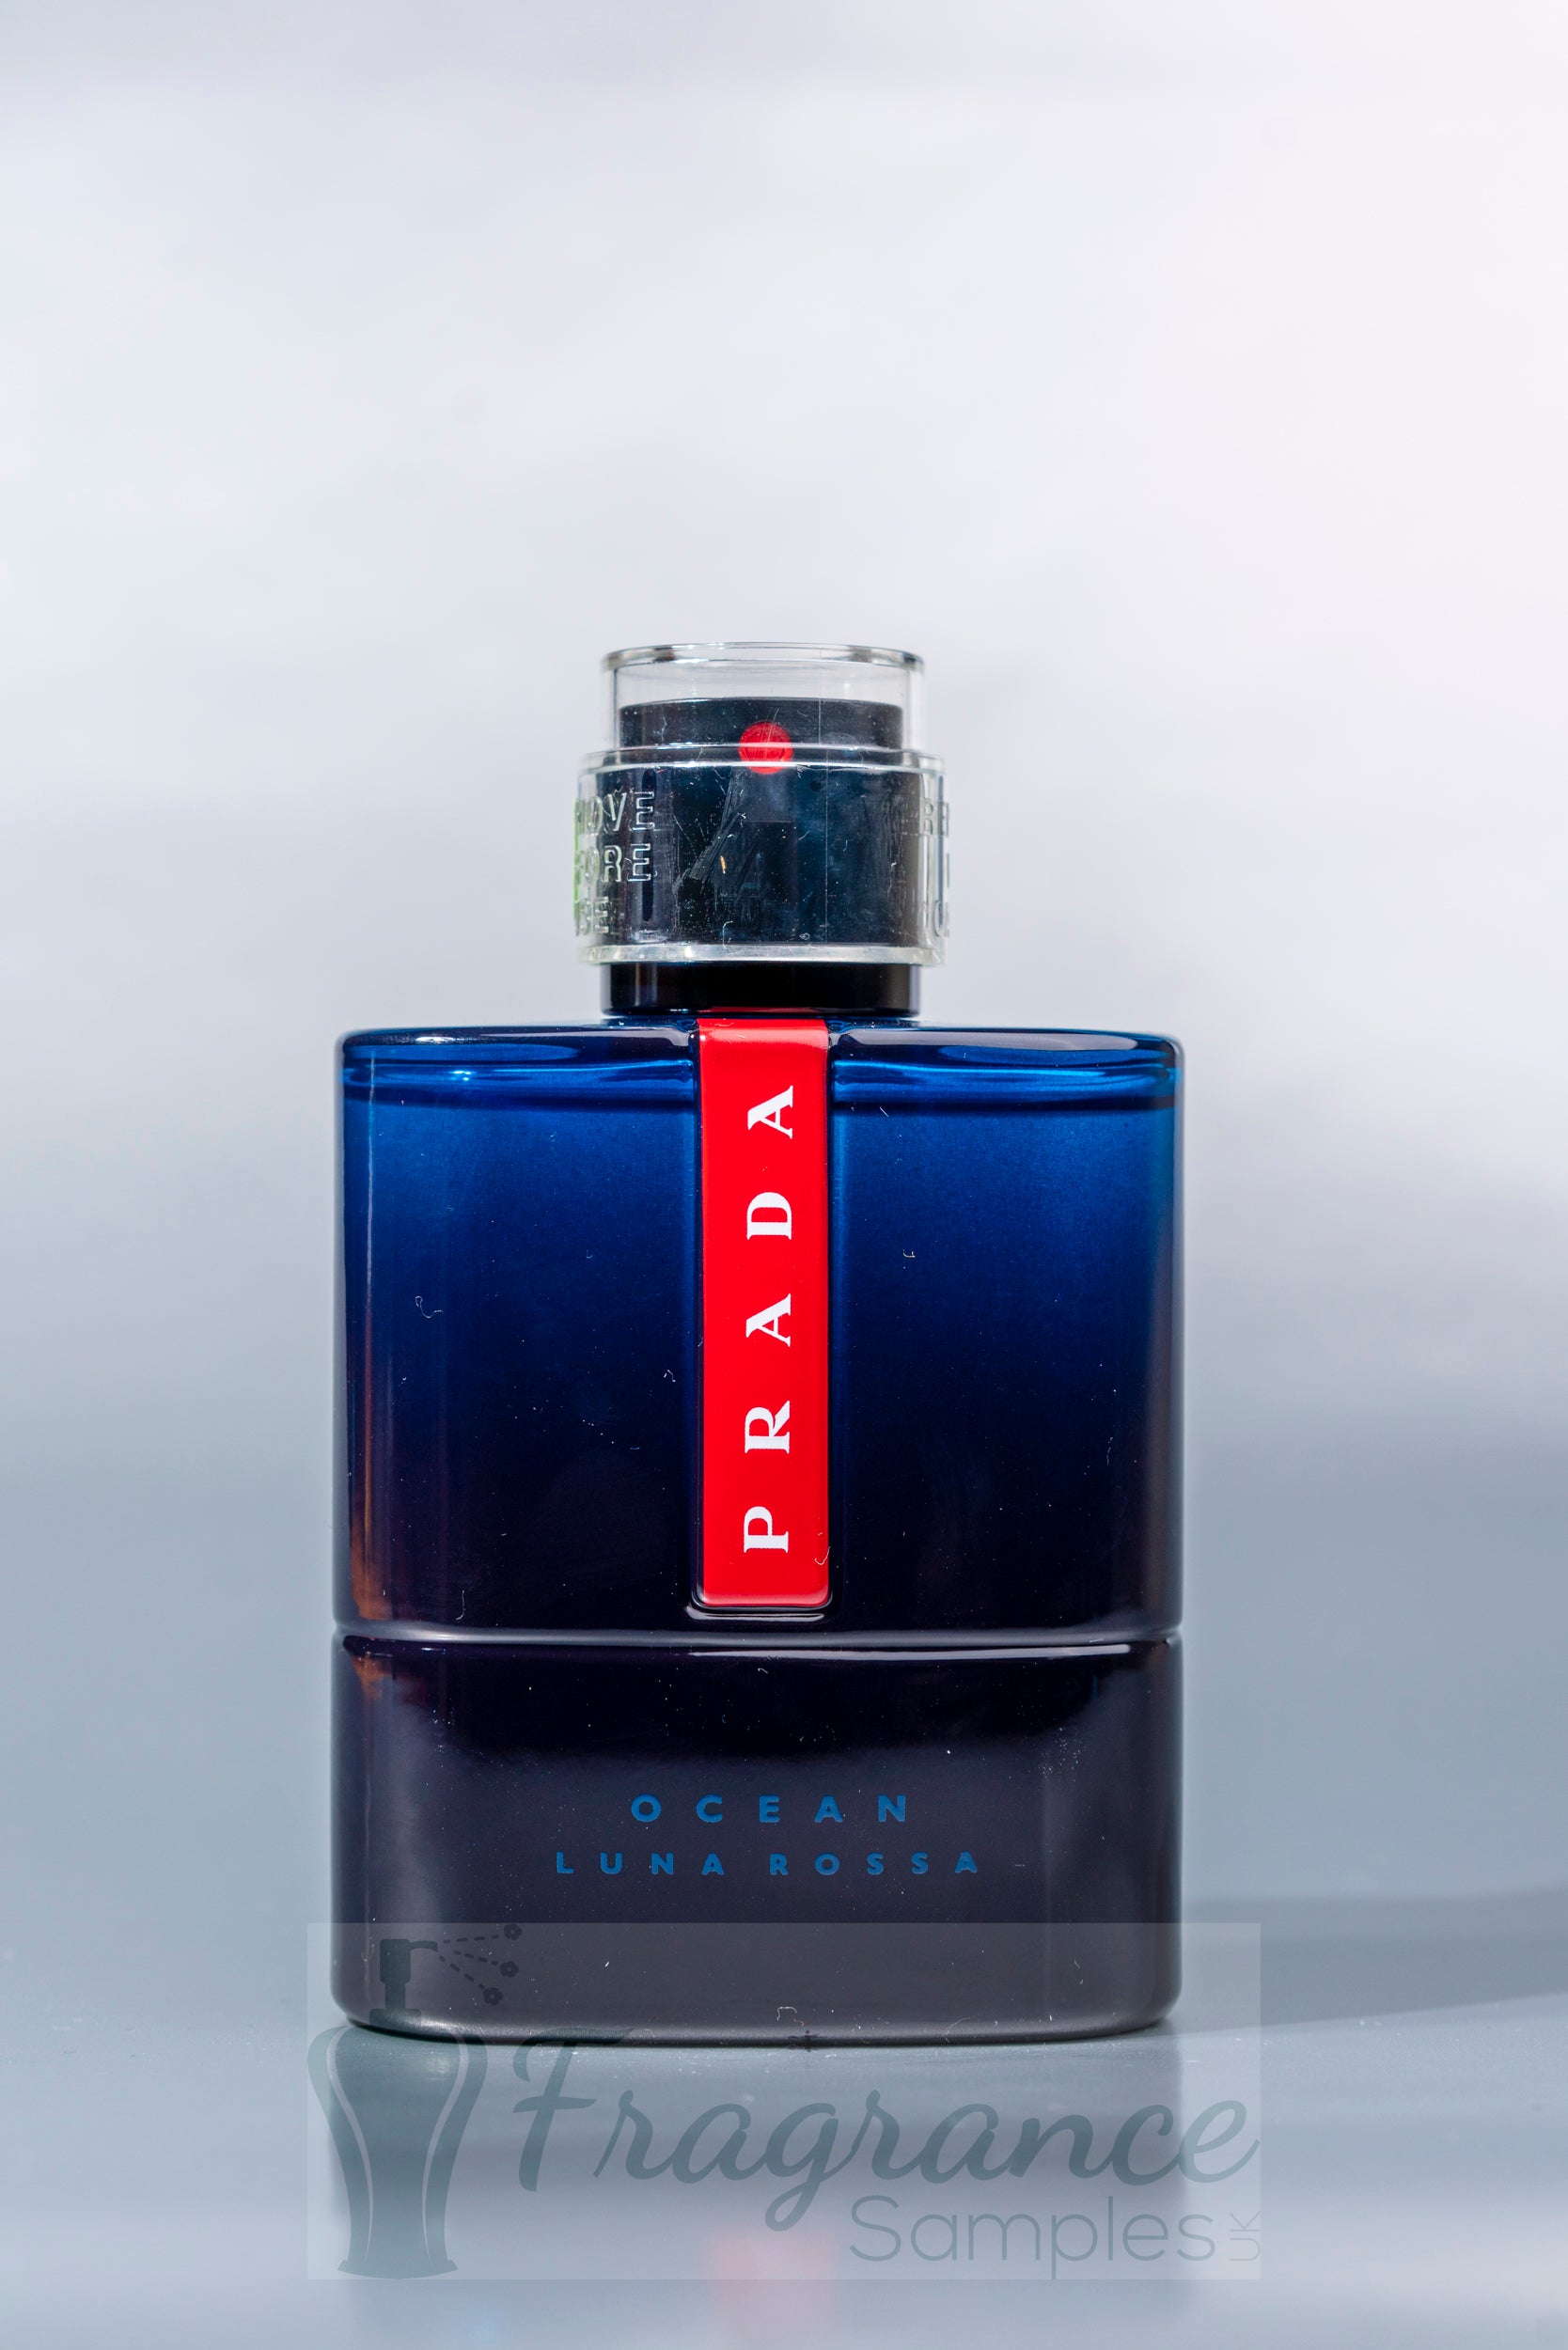 Prada Luna Rossa Ocean – Fragrance Samples UK